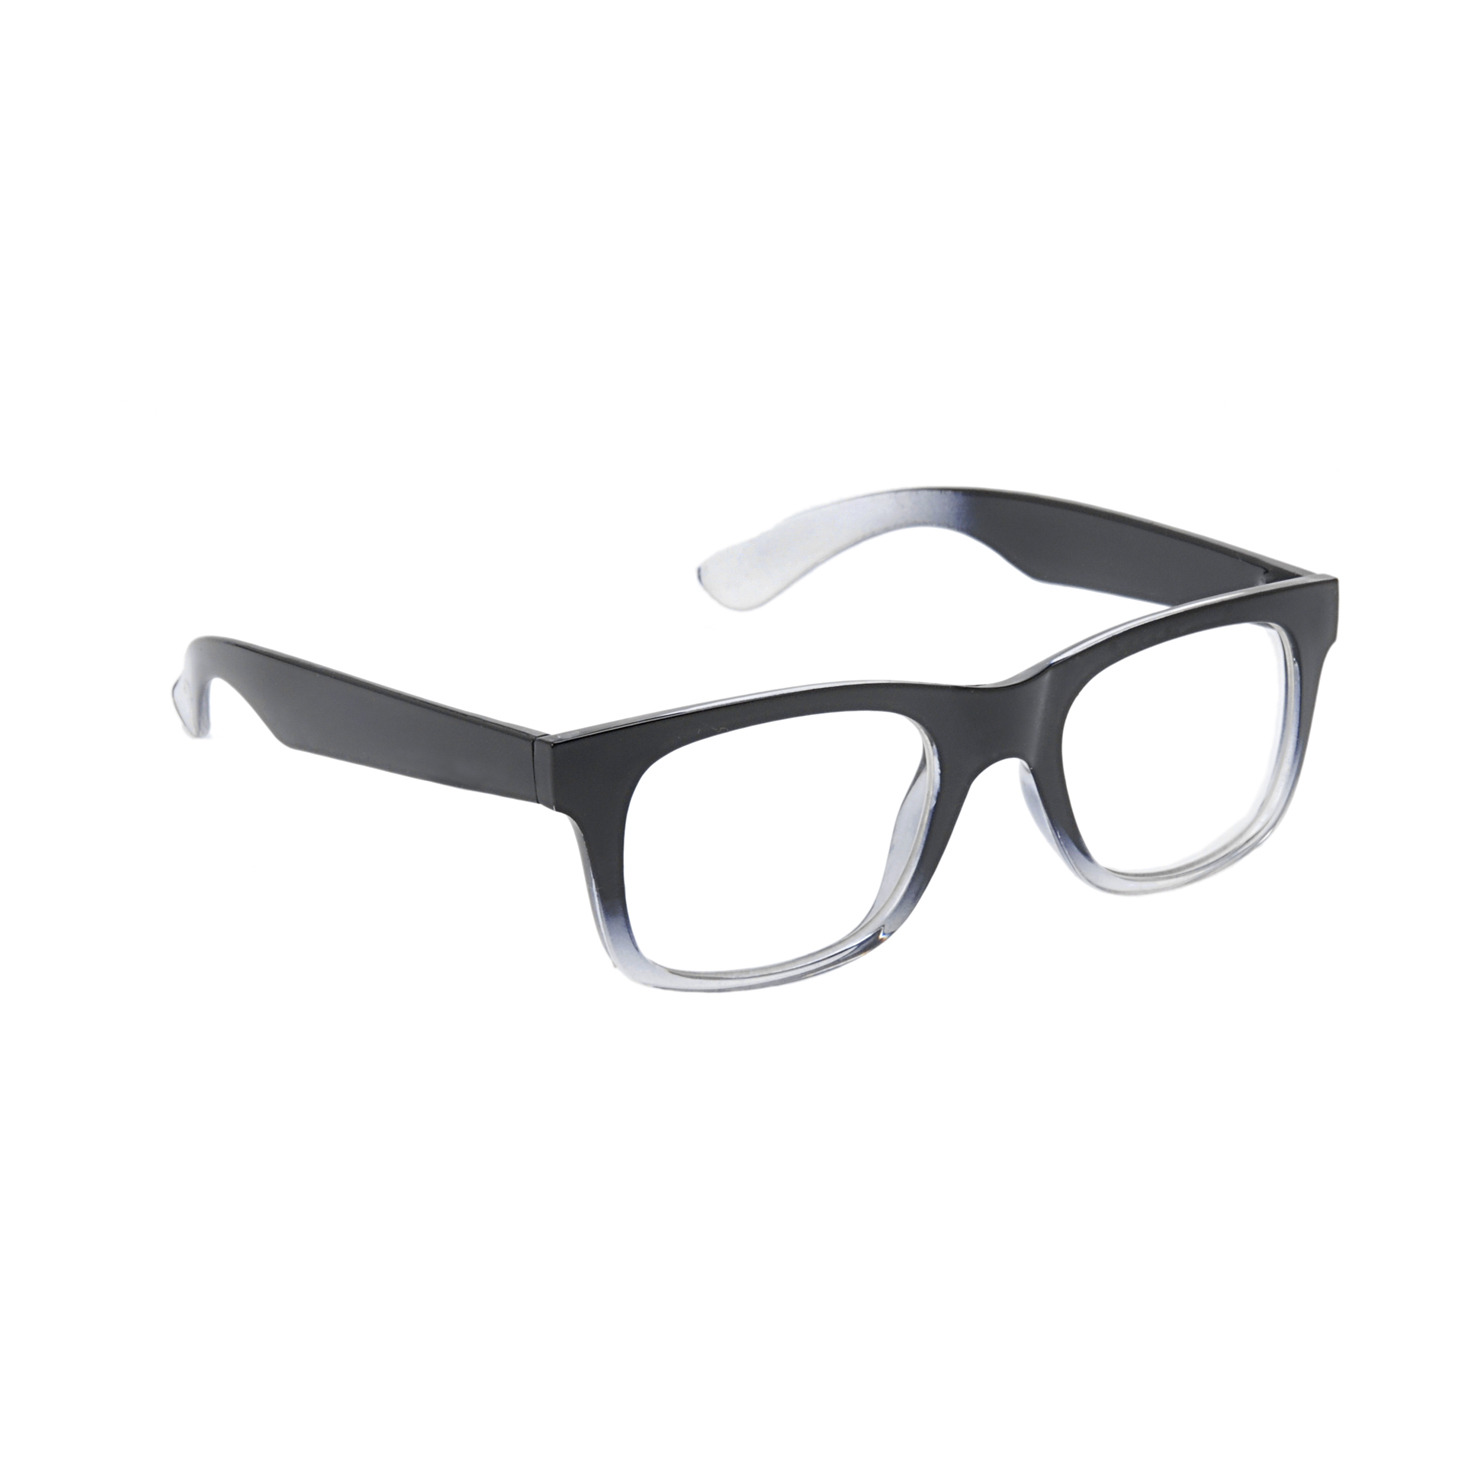 12 Nerdy Glasses Psd Images Geek Glasses Nerd Geek Glasses Vector 